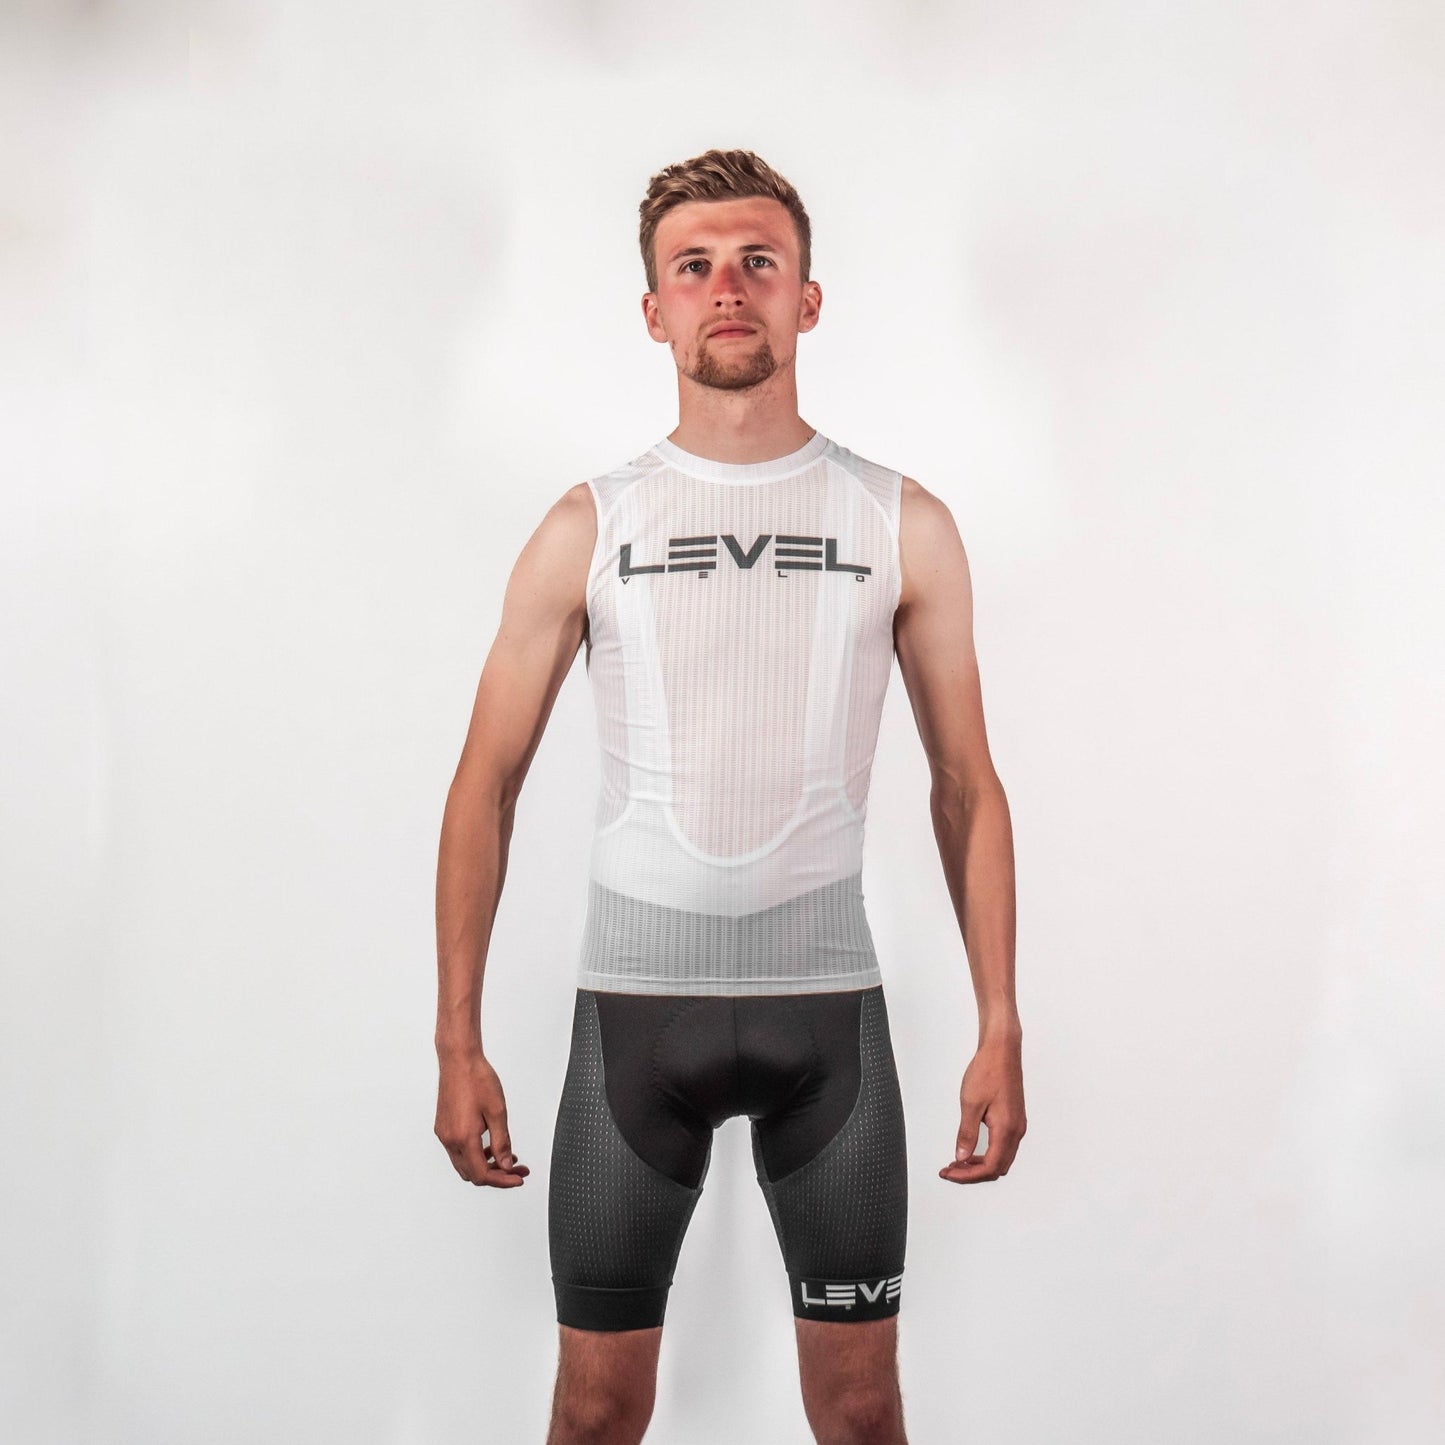 Level Velo Elite vest & Base Layer - LEVEL VELO